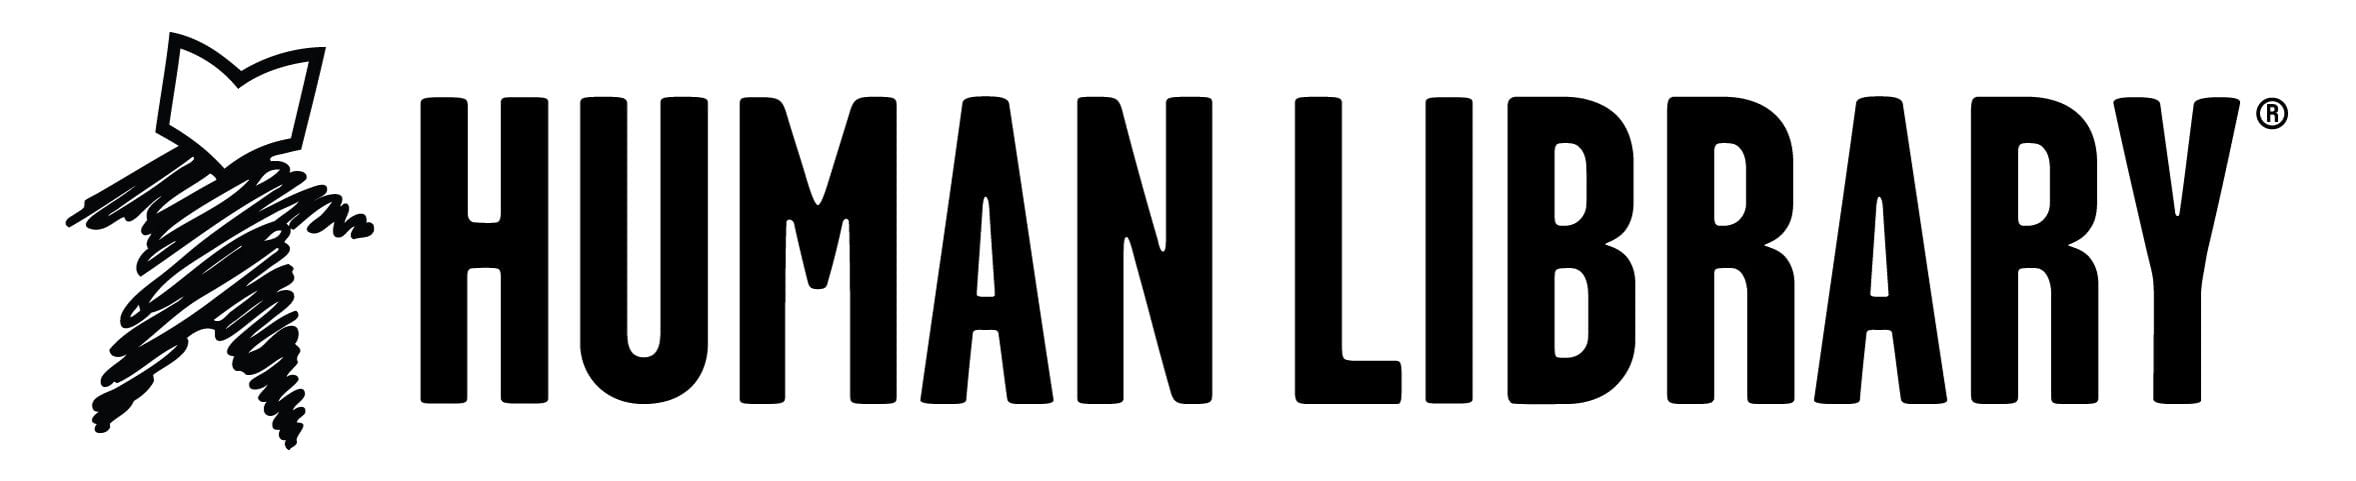 Human Library logo